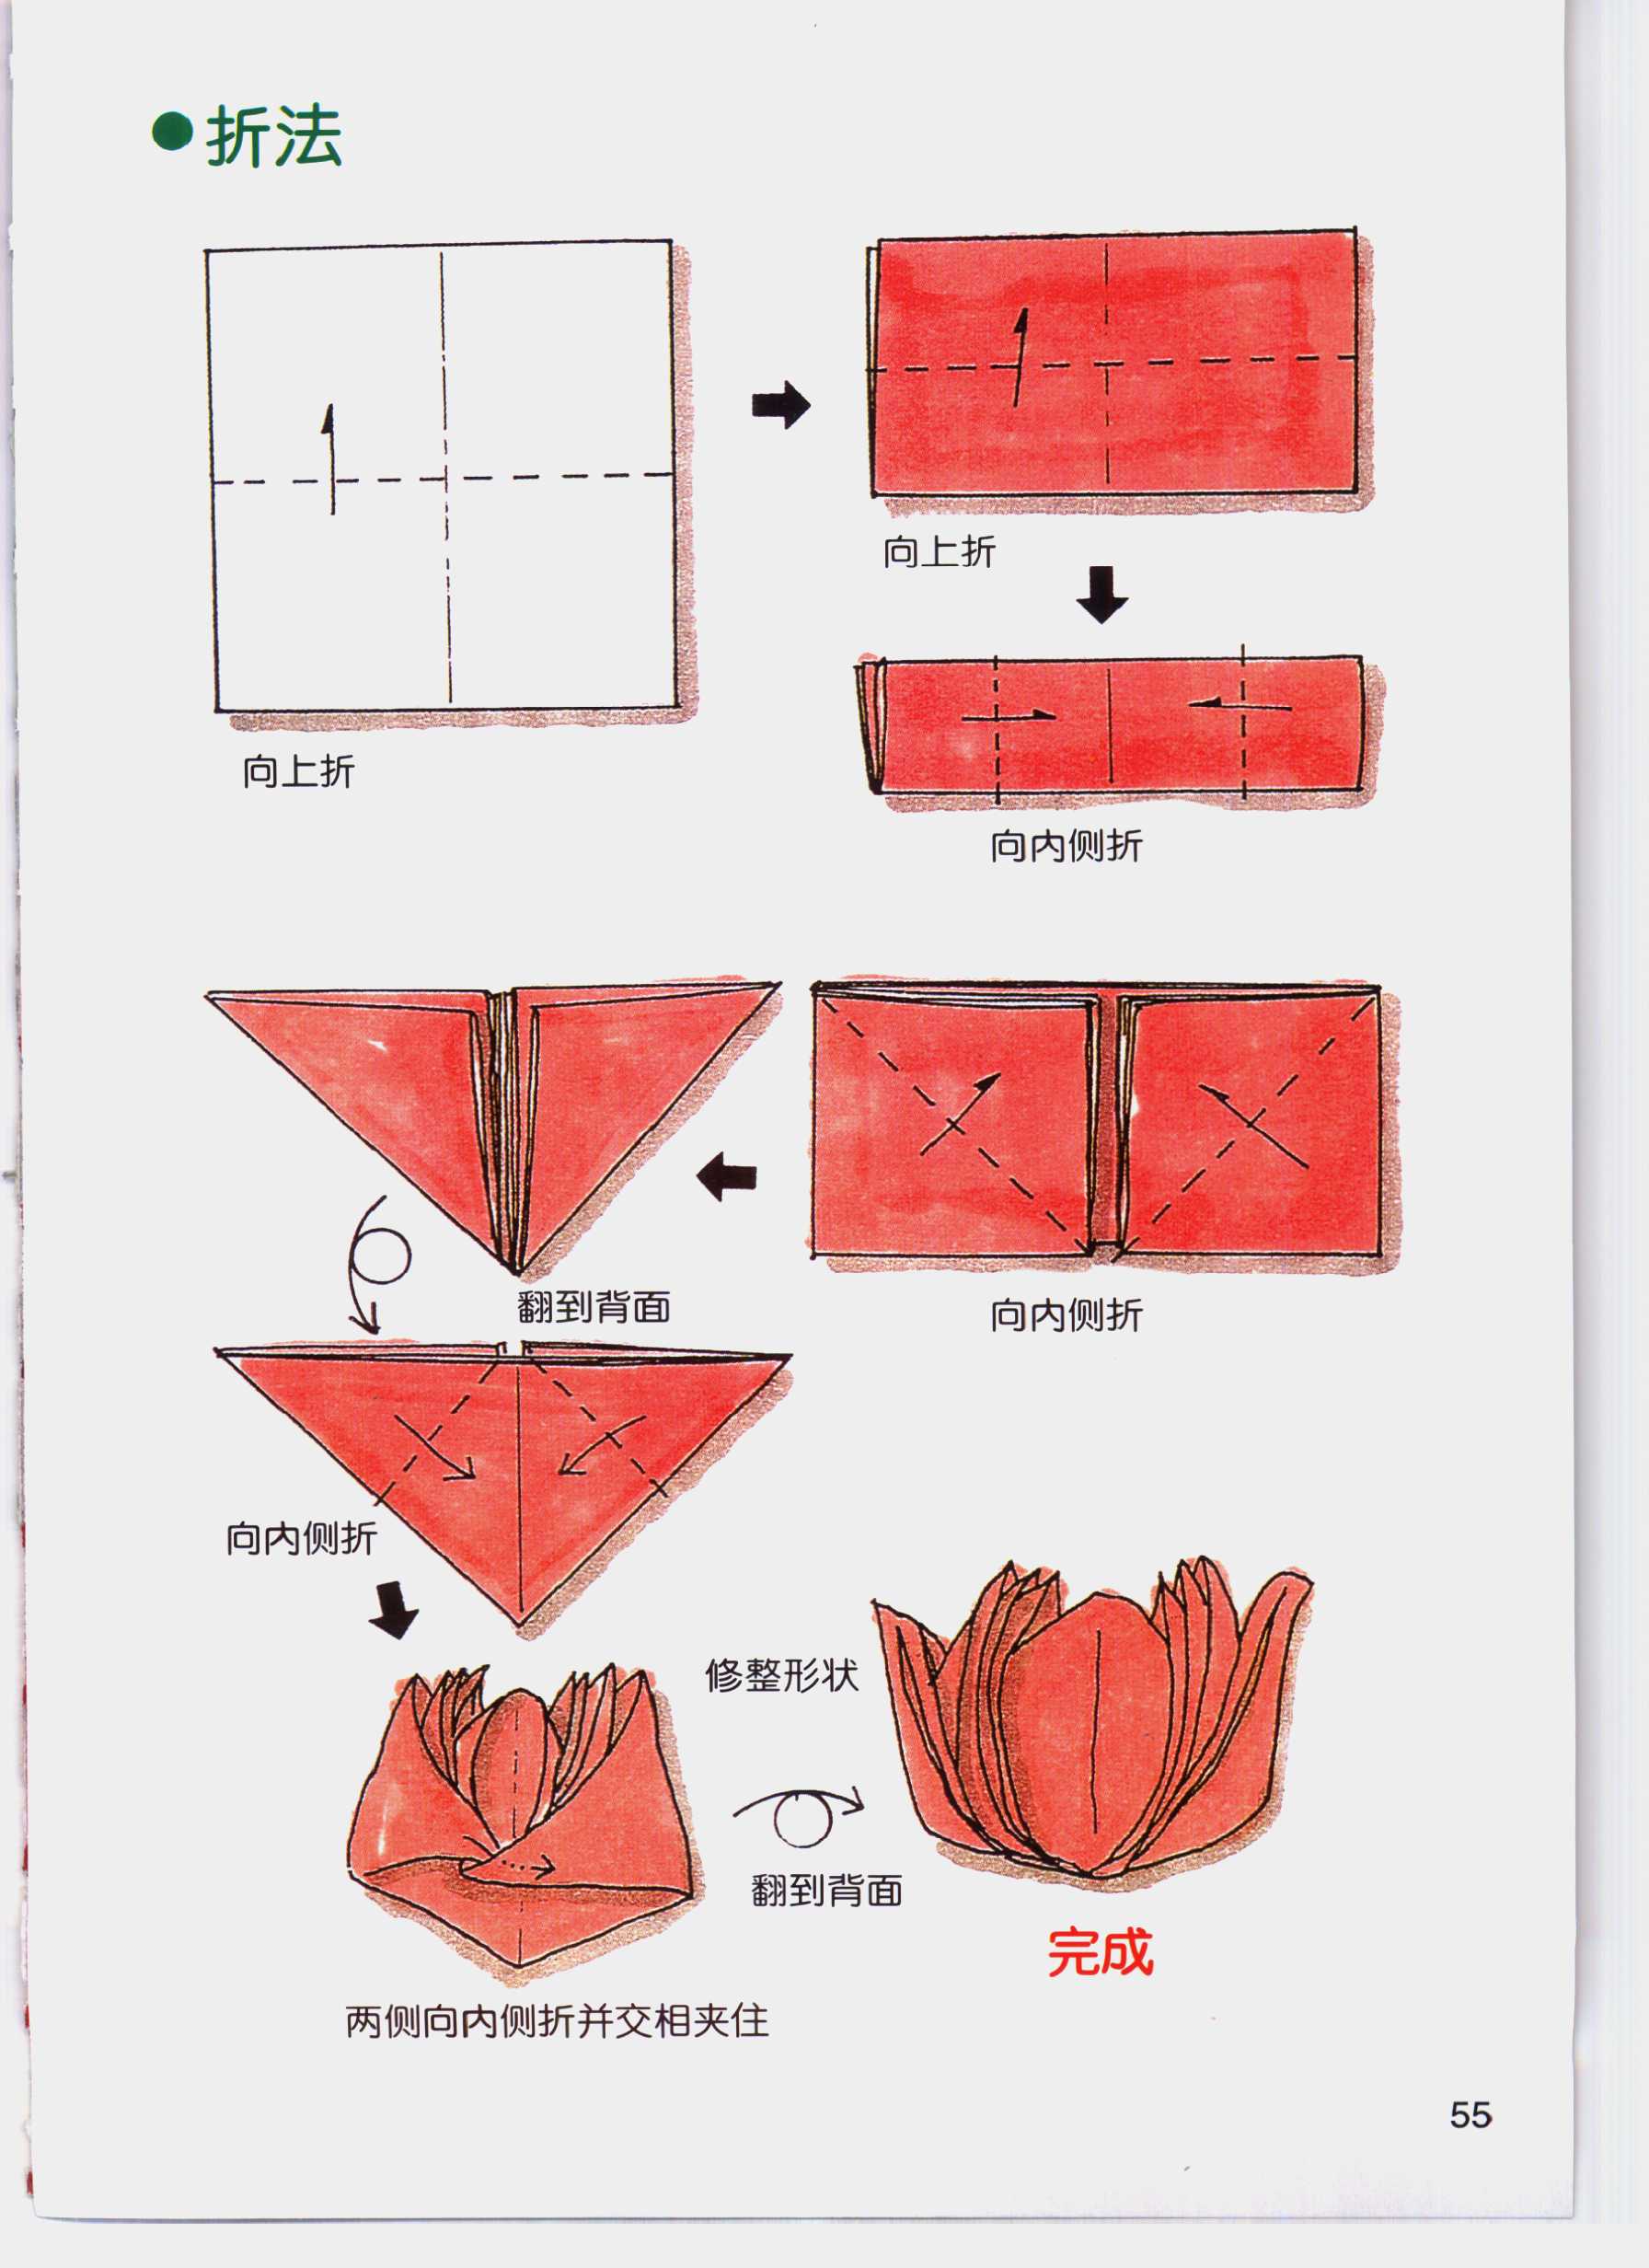 origami-składanie serwetek - 819272642.jpg